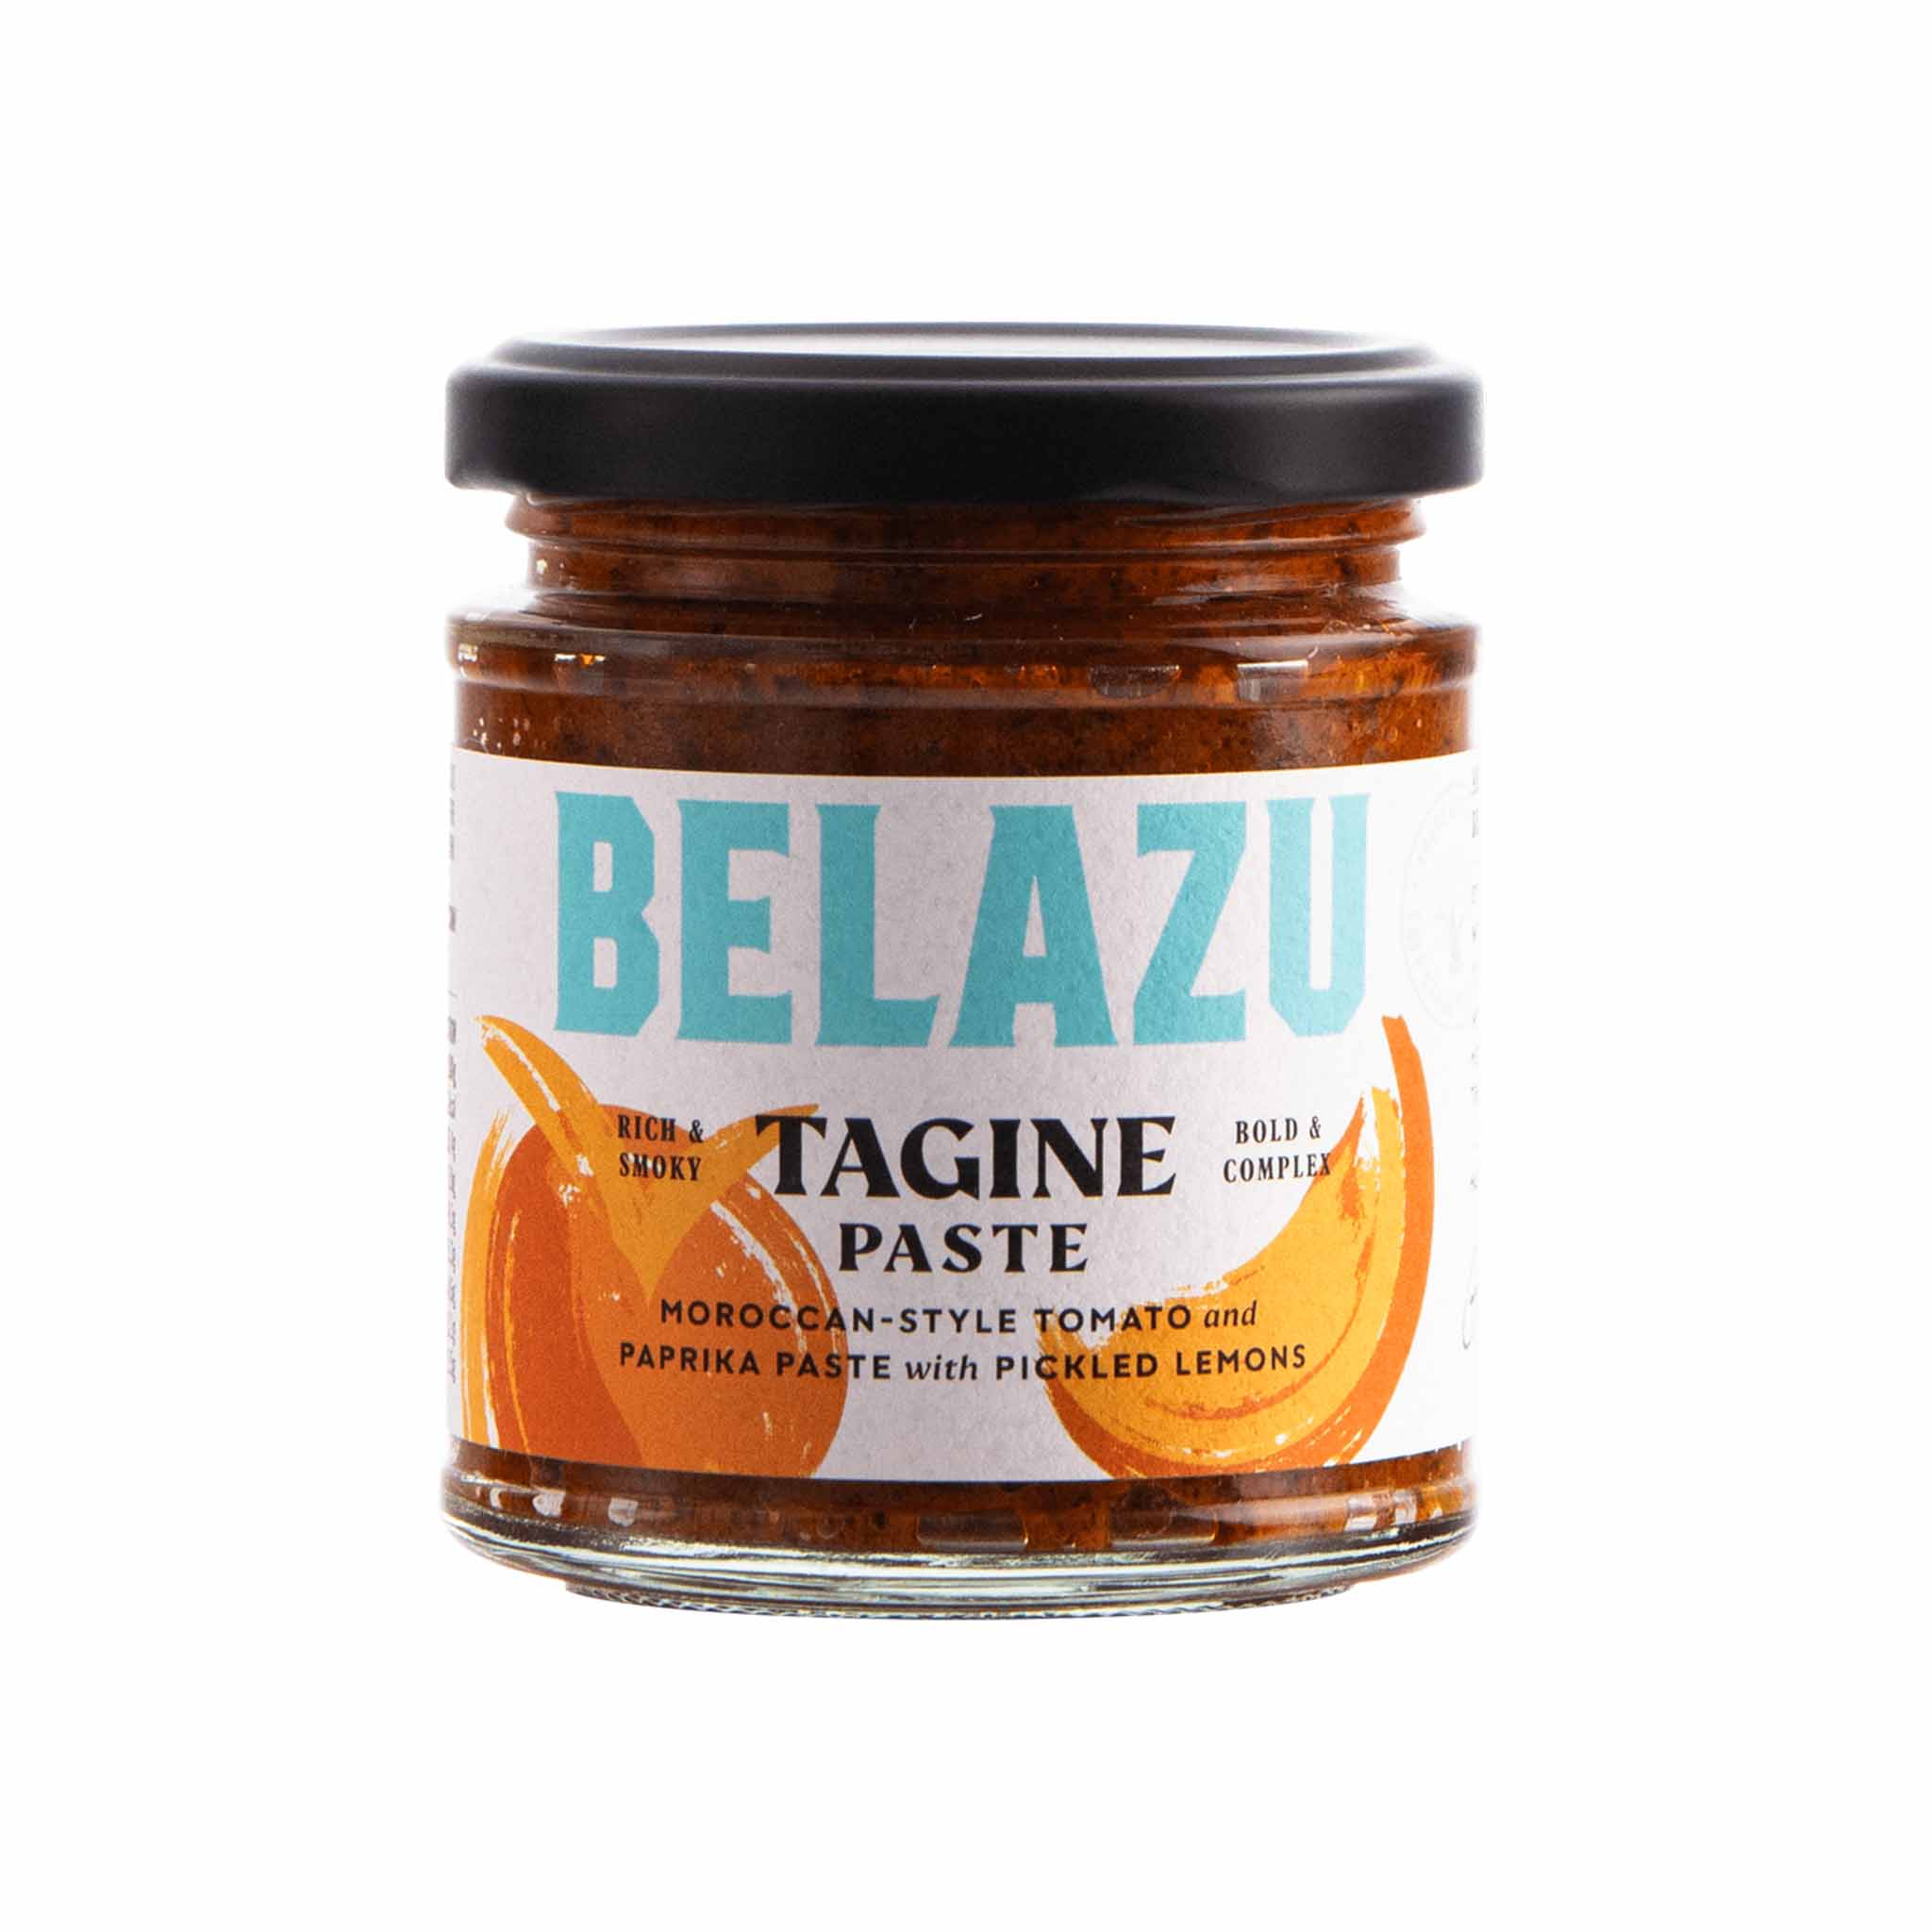 Belazu Tagine Tomato and Paprika Paste